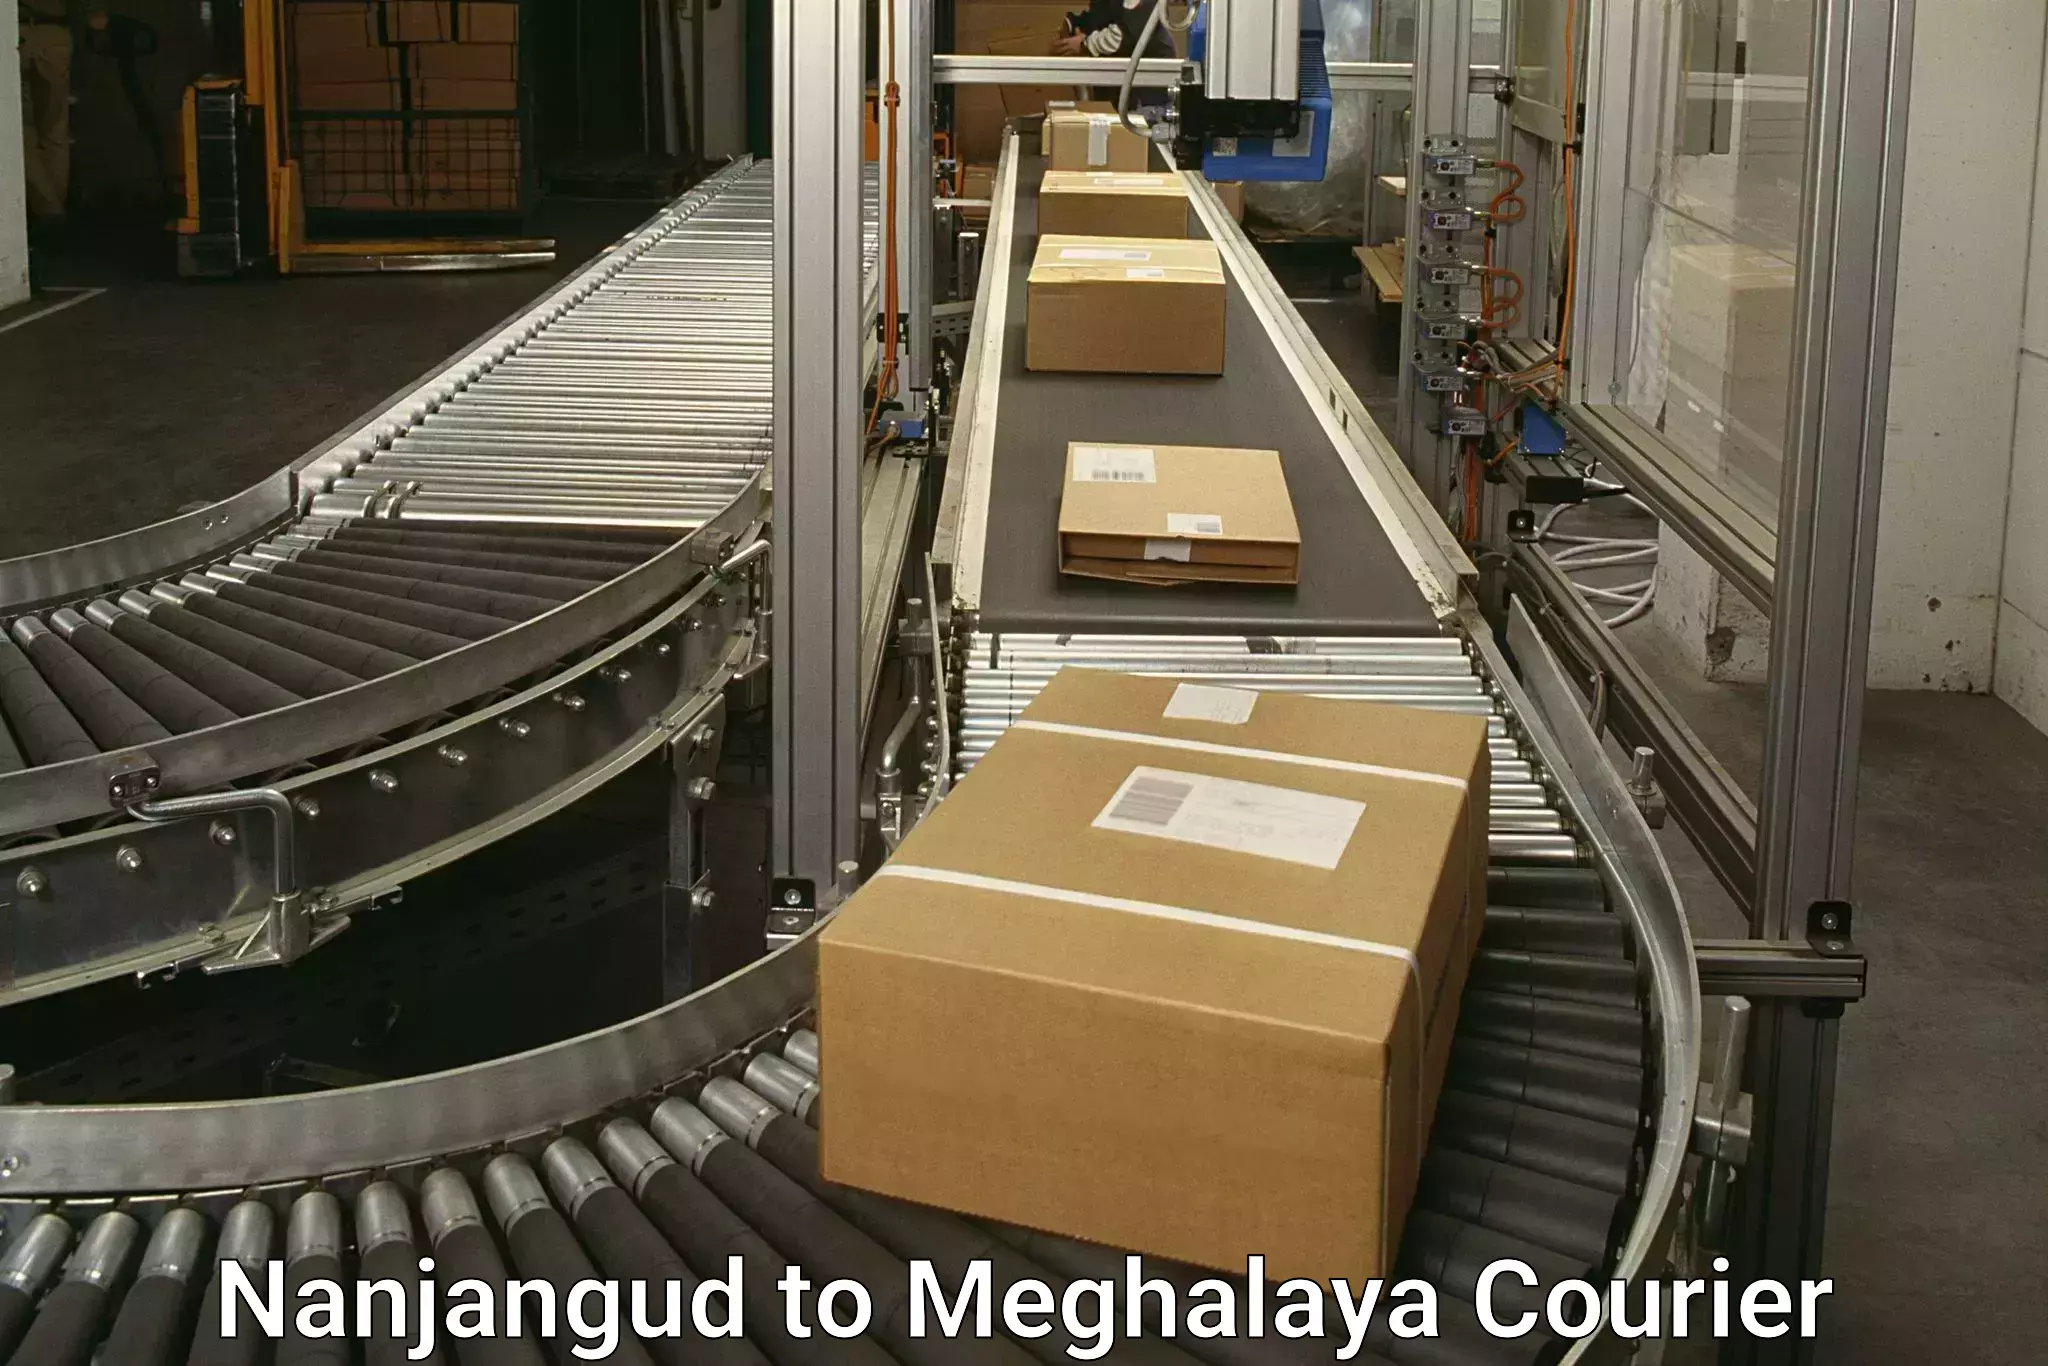 Global courier networks Nanjangud to Meghalaya